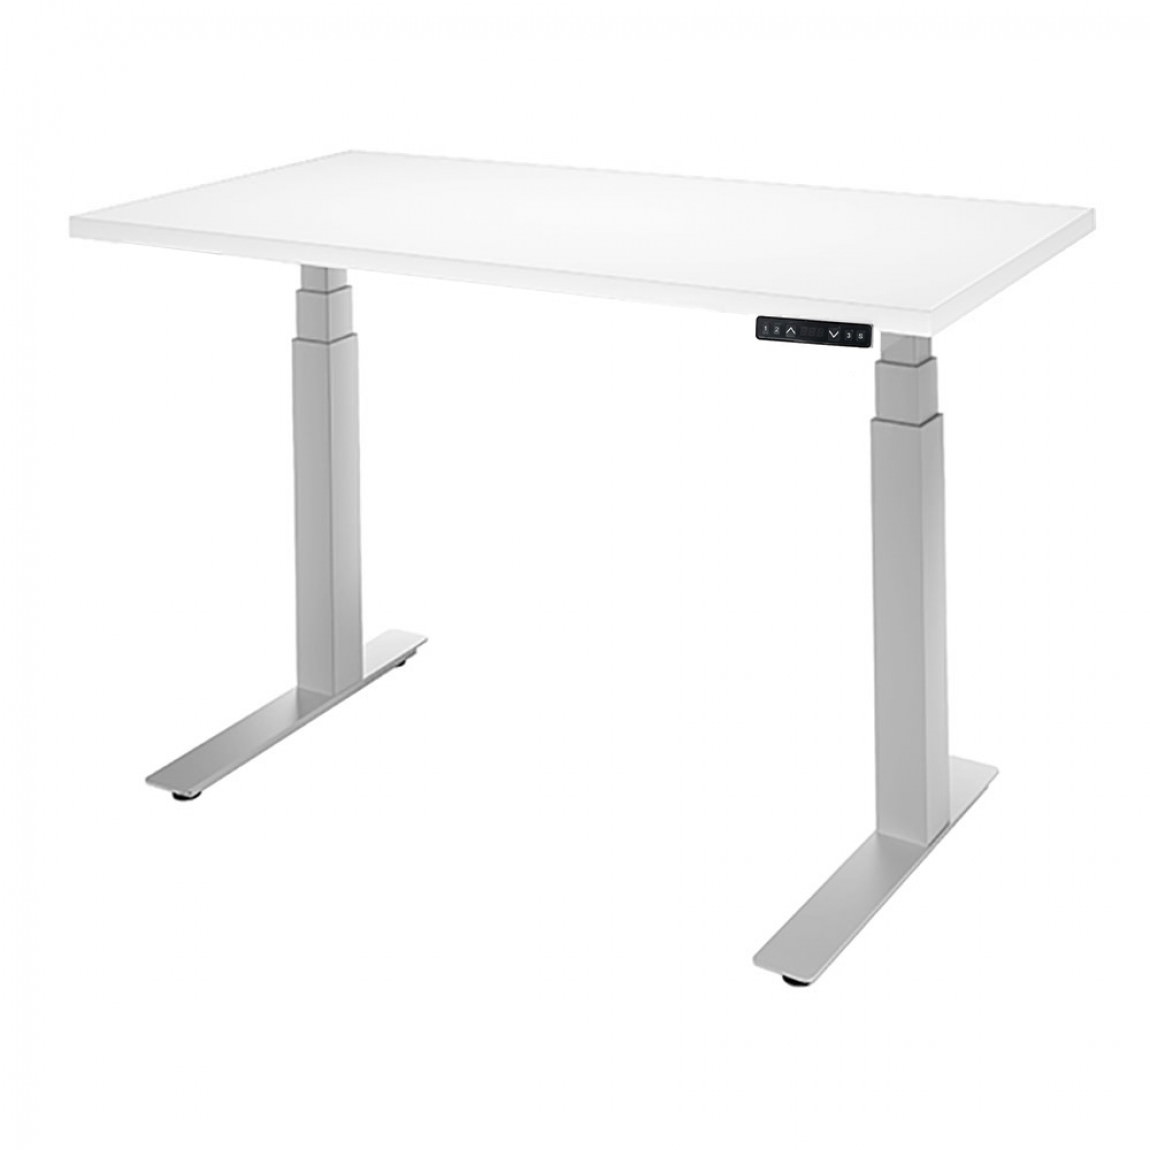 https://madisonliquidators.com/images/p/1150/9943-sit-to-stand-height-adjustable-desk-1.jpg